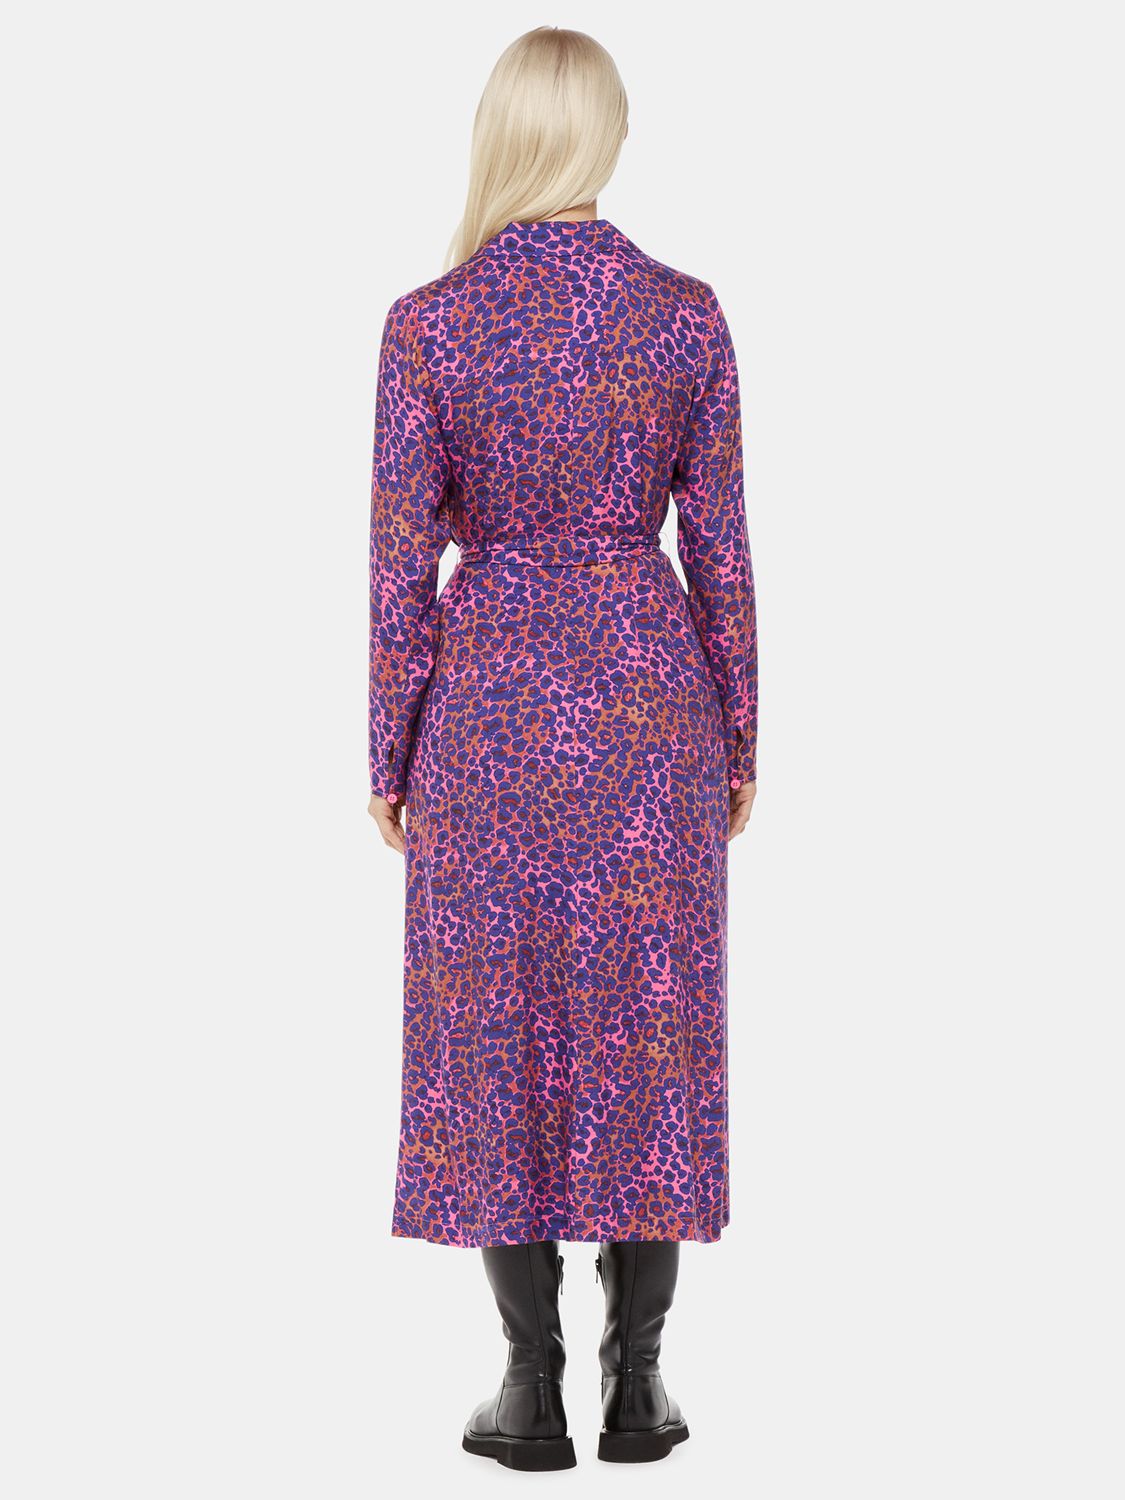 Whistles Petite Mottled Leopard Print Midi Dress, Pink/Multi, 6